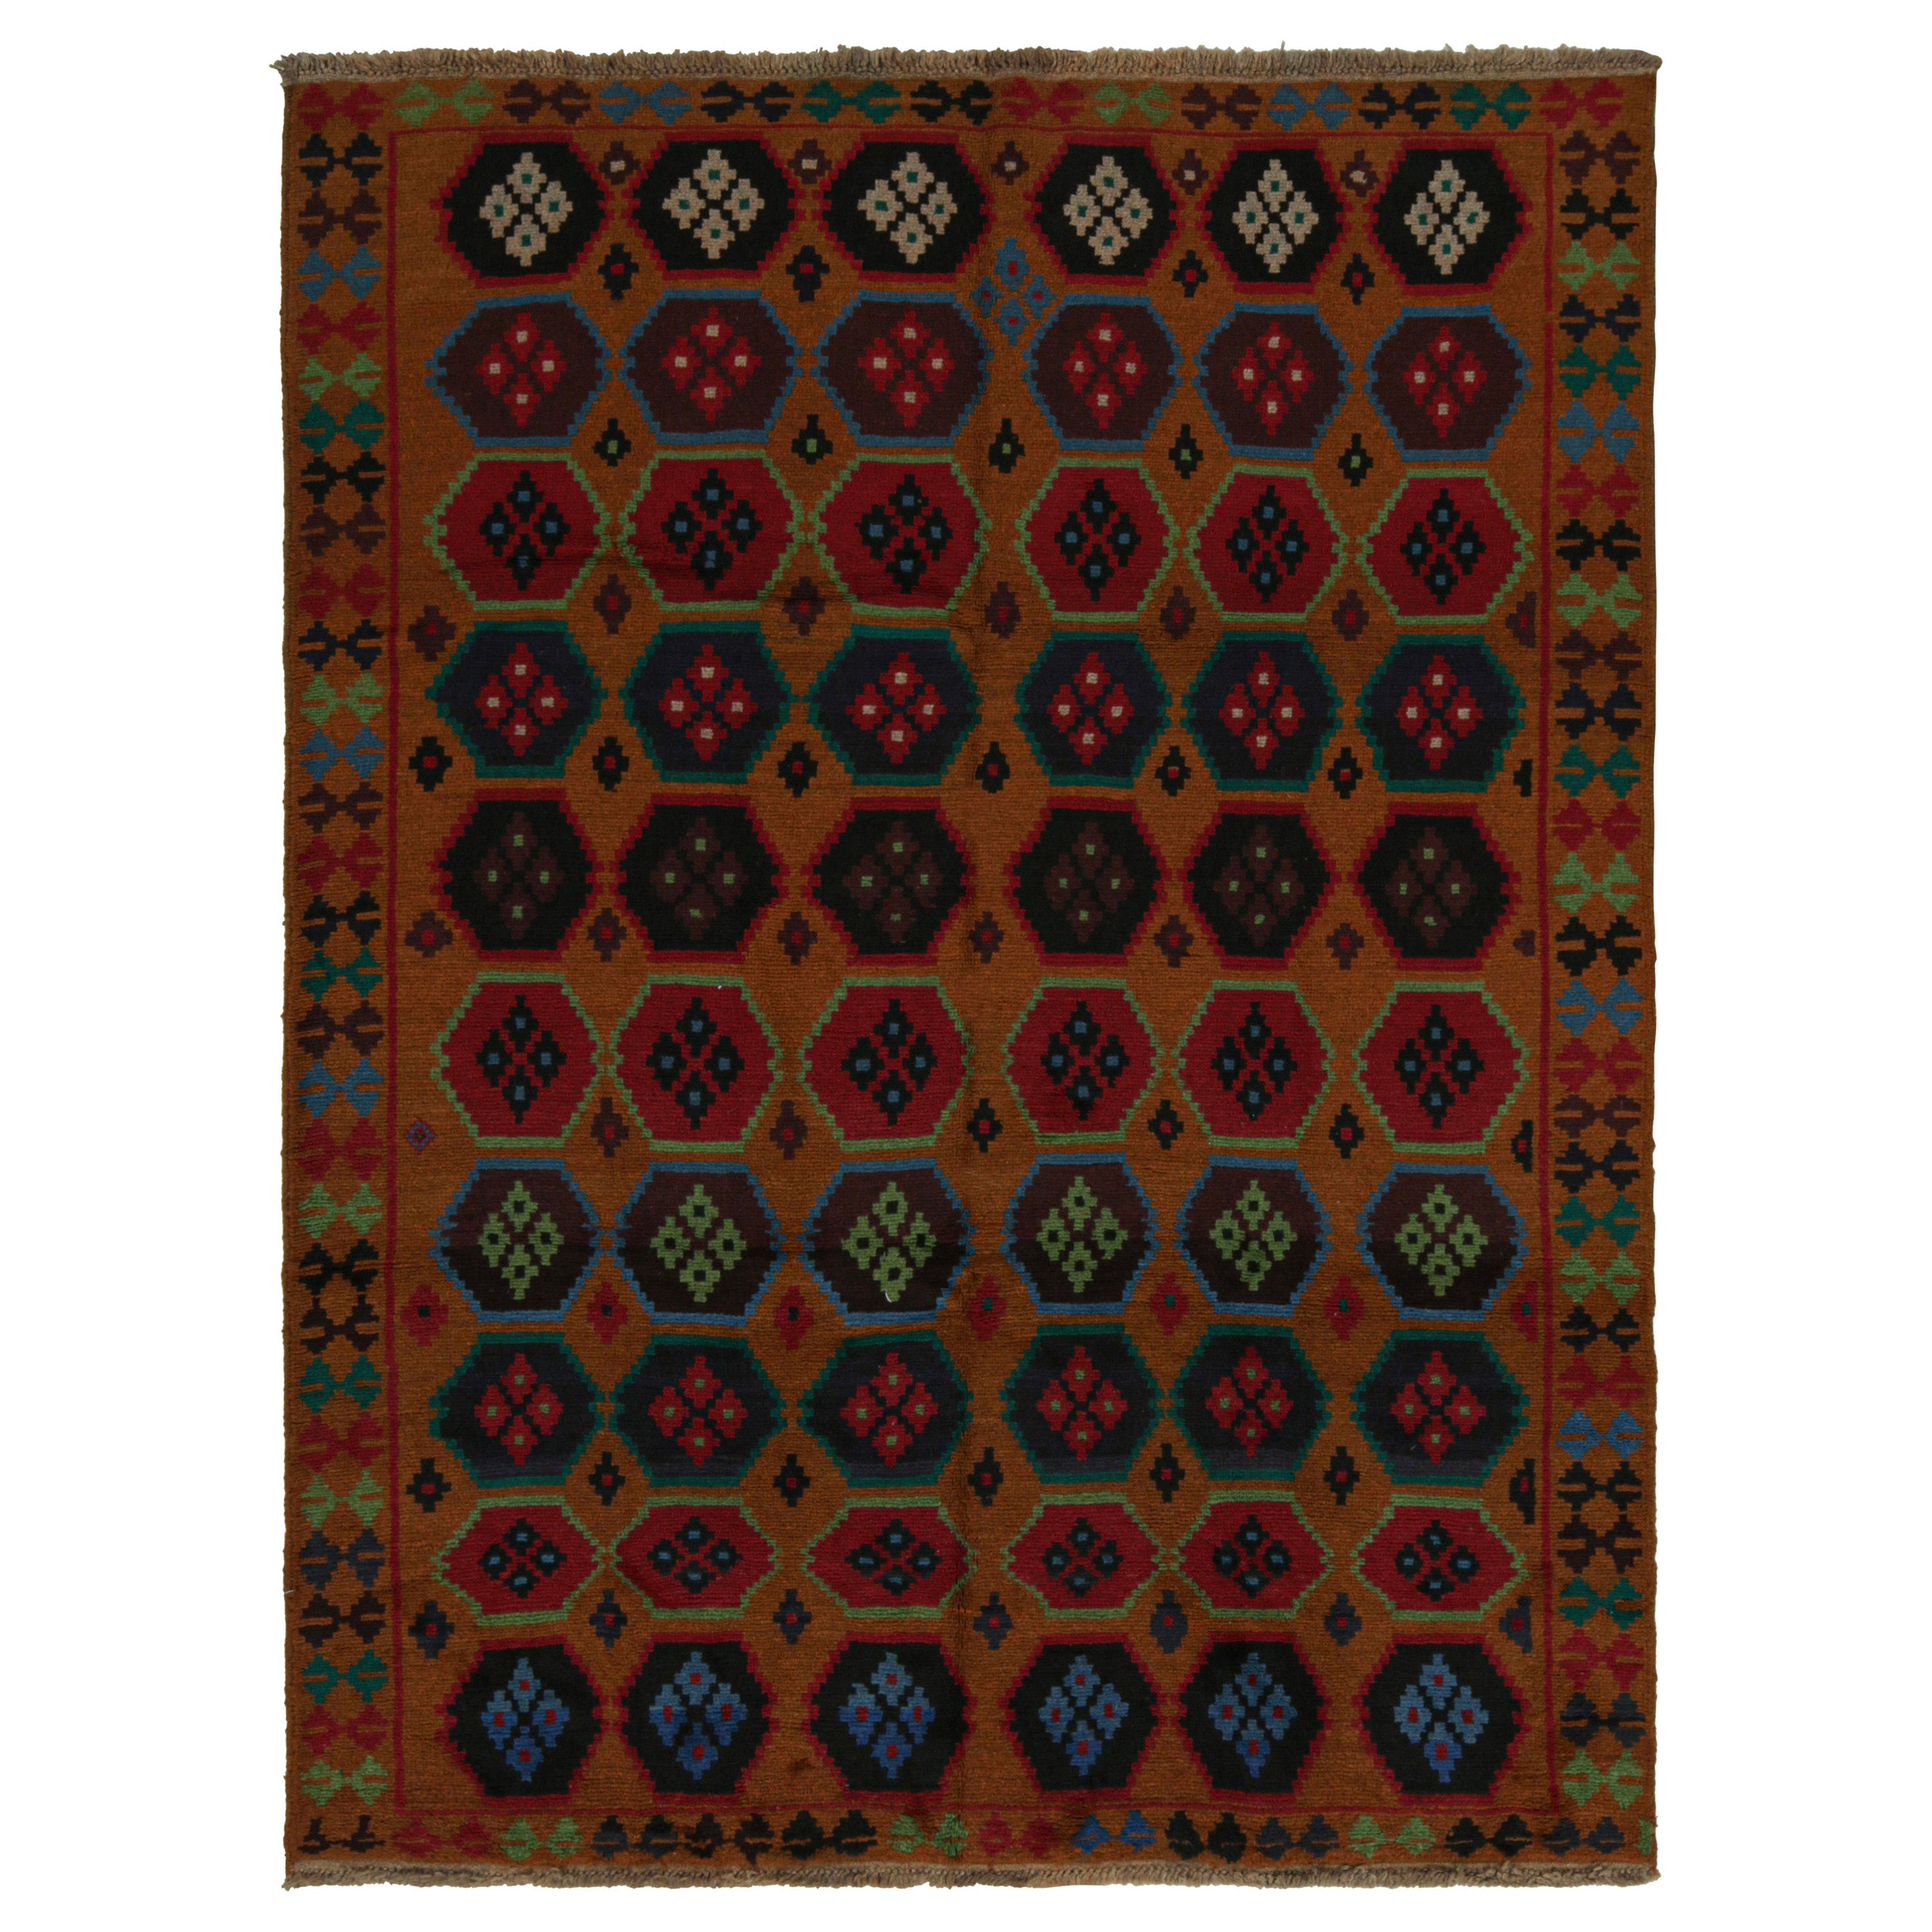 Rug & Kilim's Baluch Tribal Rug in Rust Tones with Colorful Hexagon Patterns (Tapis tribal Baluch dans les tons rouille avec motifs hexagonaux colorés)